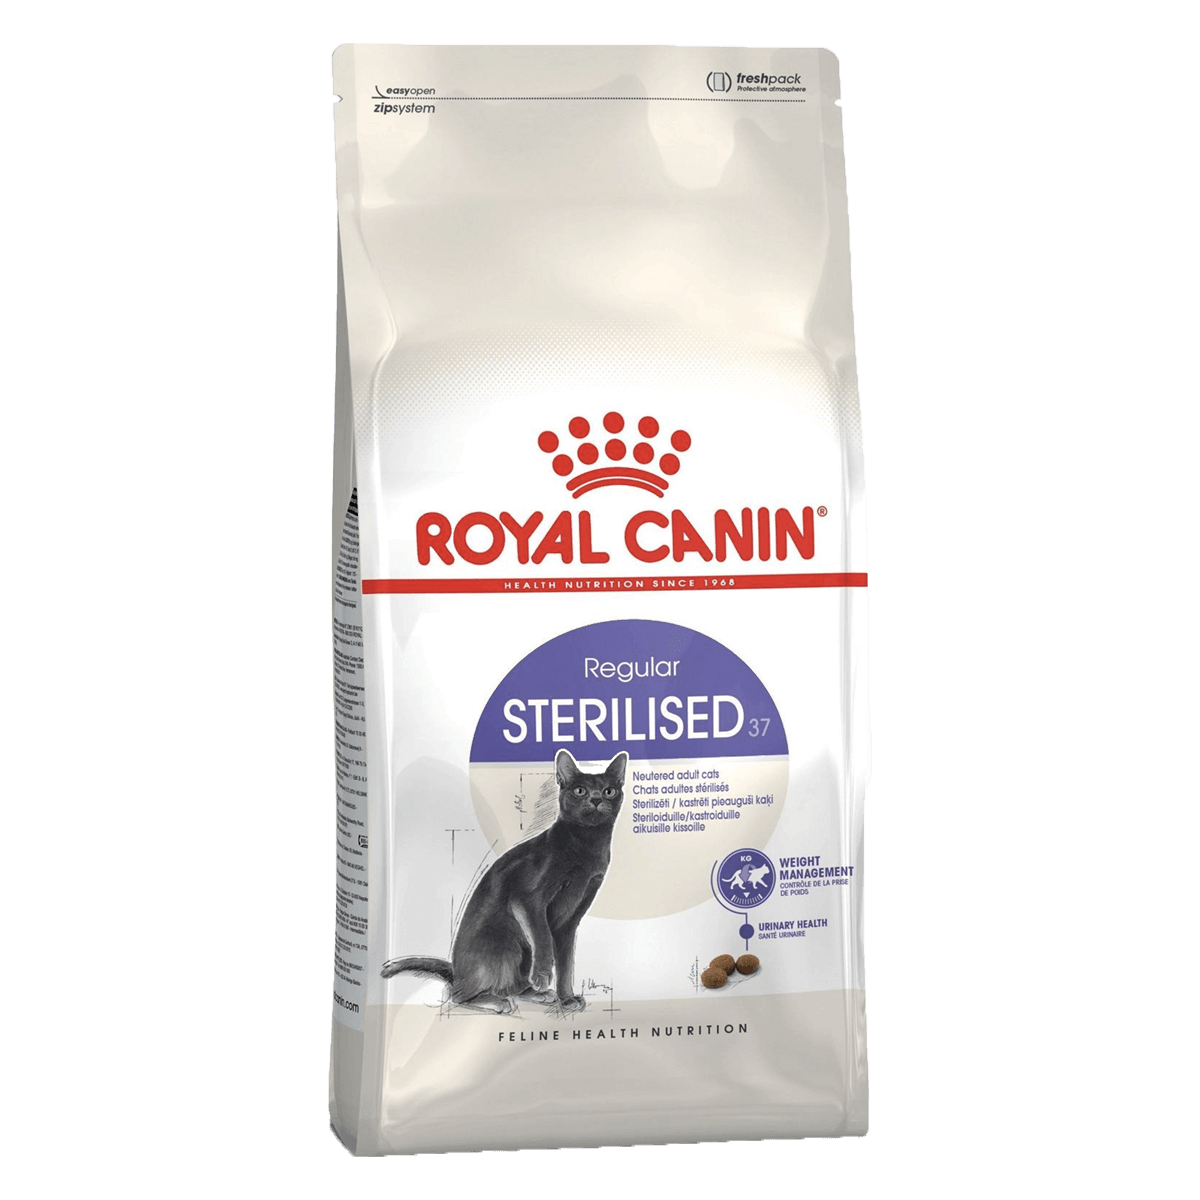 Royal Canin Sterilised, 10 кг - корм Роял Канин для взрослых стерилизованных кошек